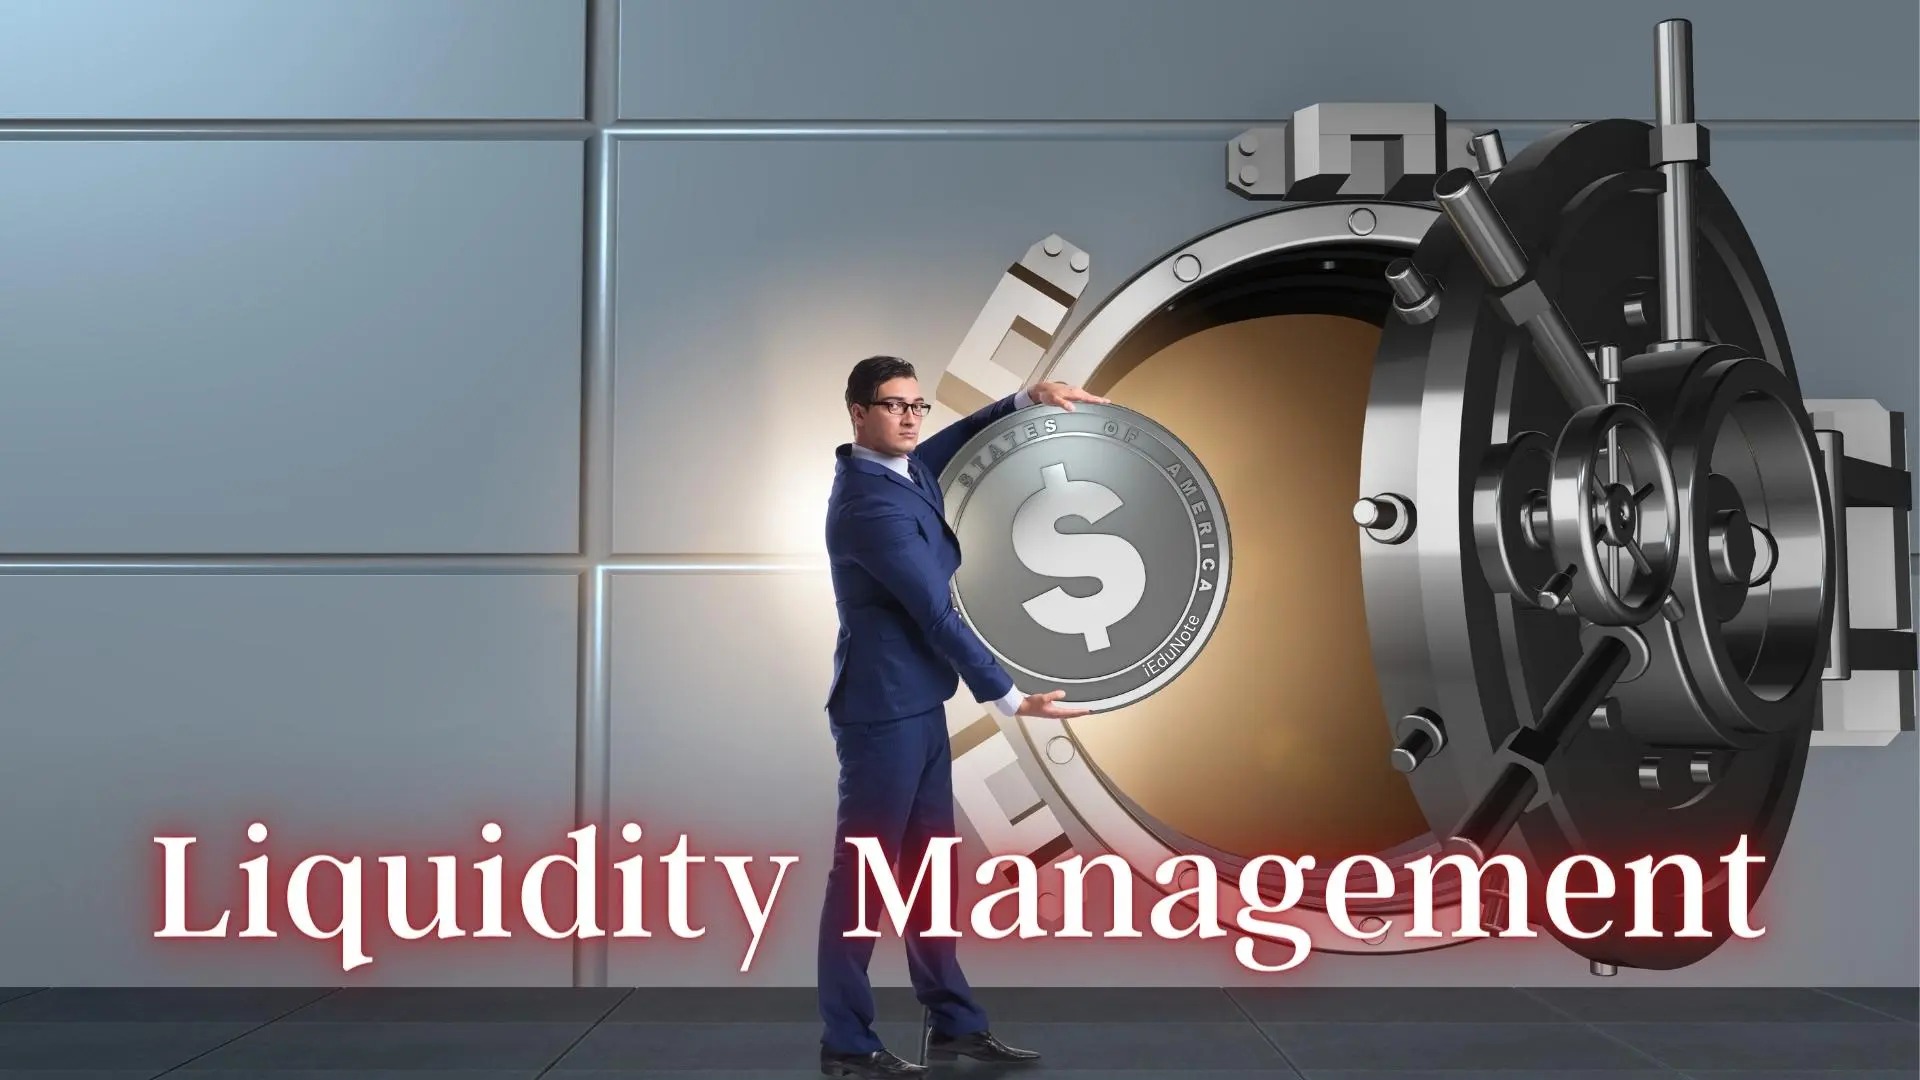 What Is Liquidity Management?